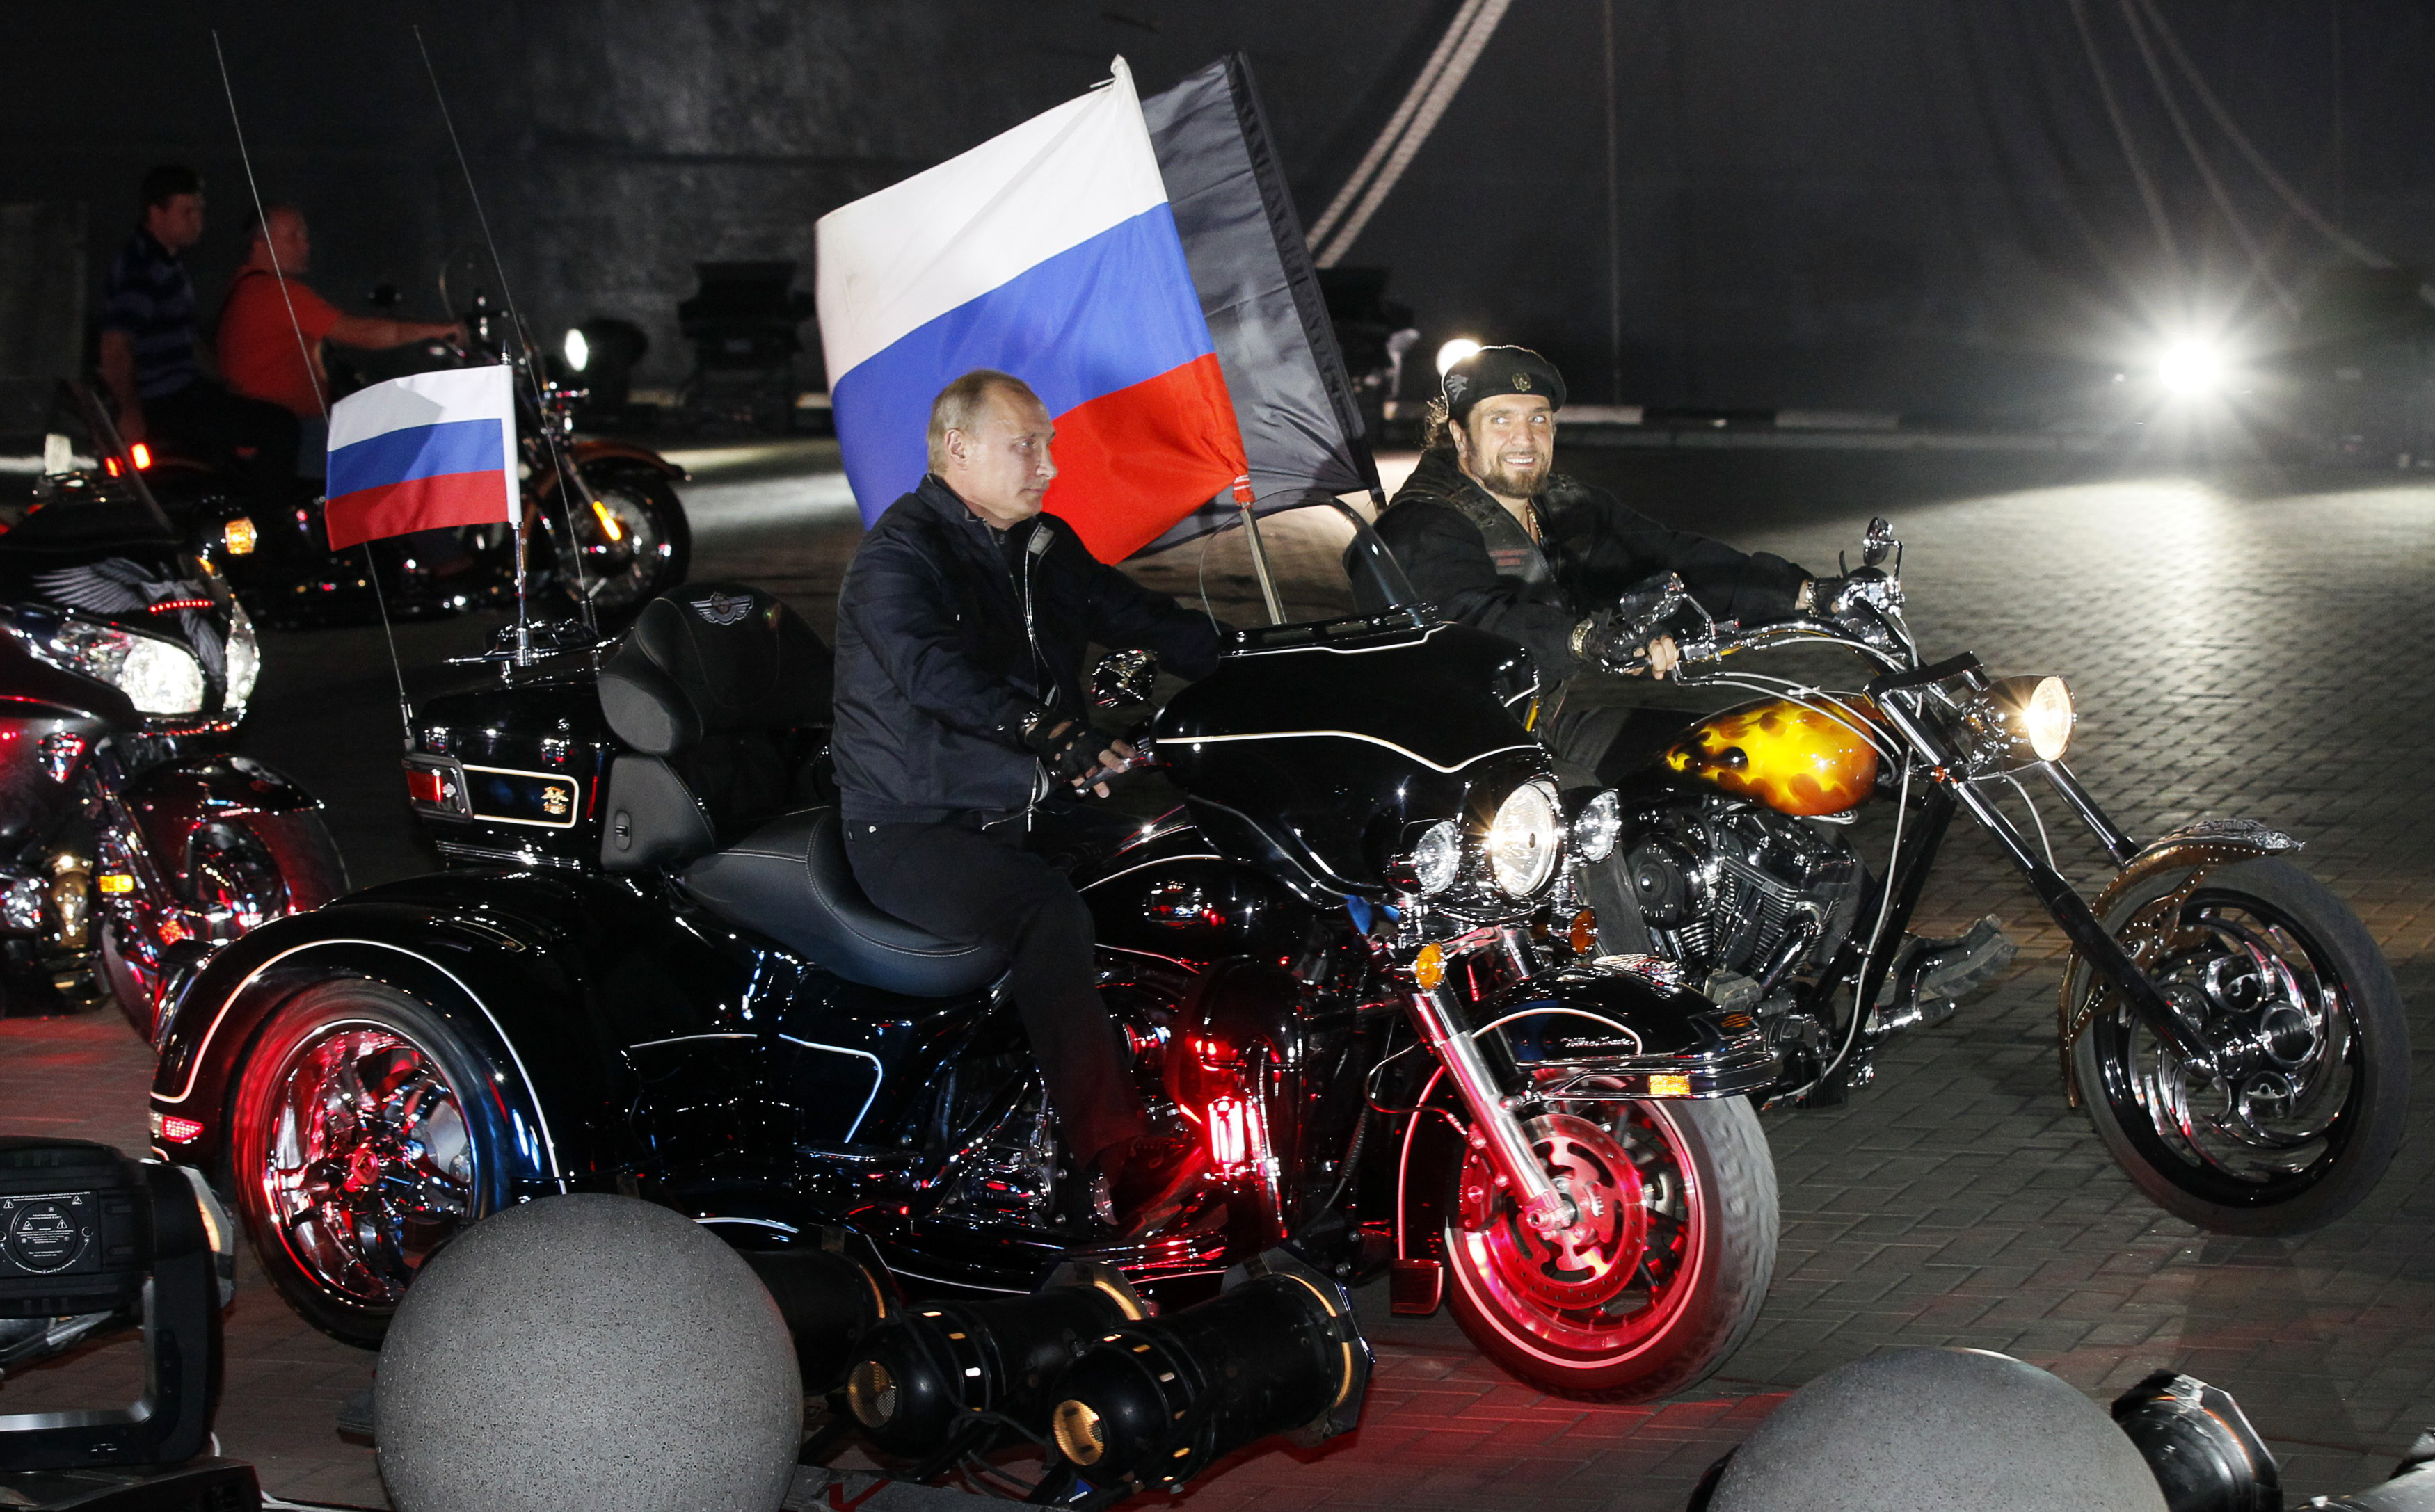 Vladimir Putin rides with Alexander Zaldostanov, leader of Nochniye Volki (the Night Wolves) biker group in Novorossiisk on Aug. 29, 2011. (Reuters)